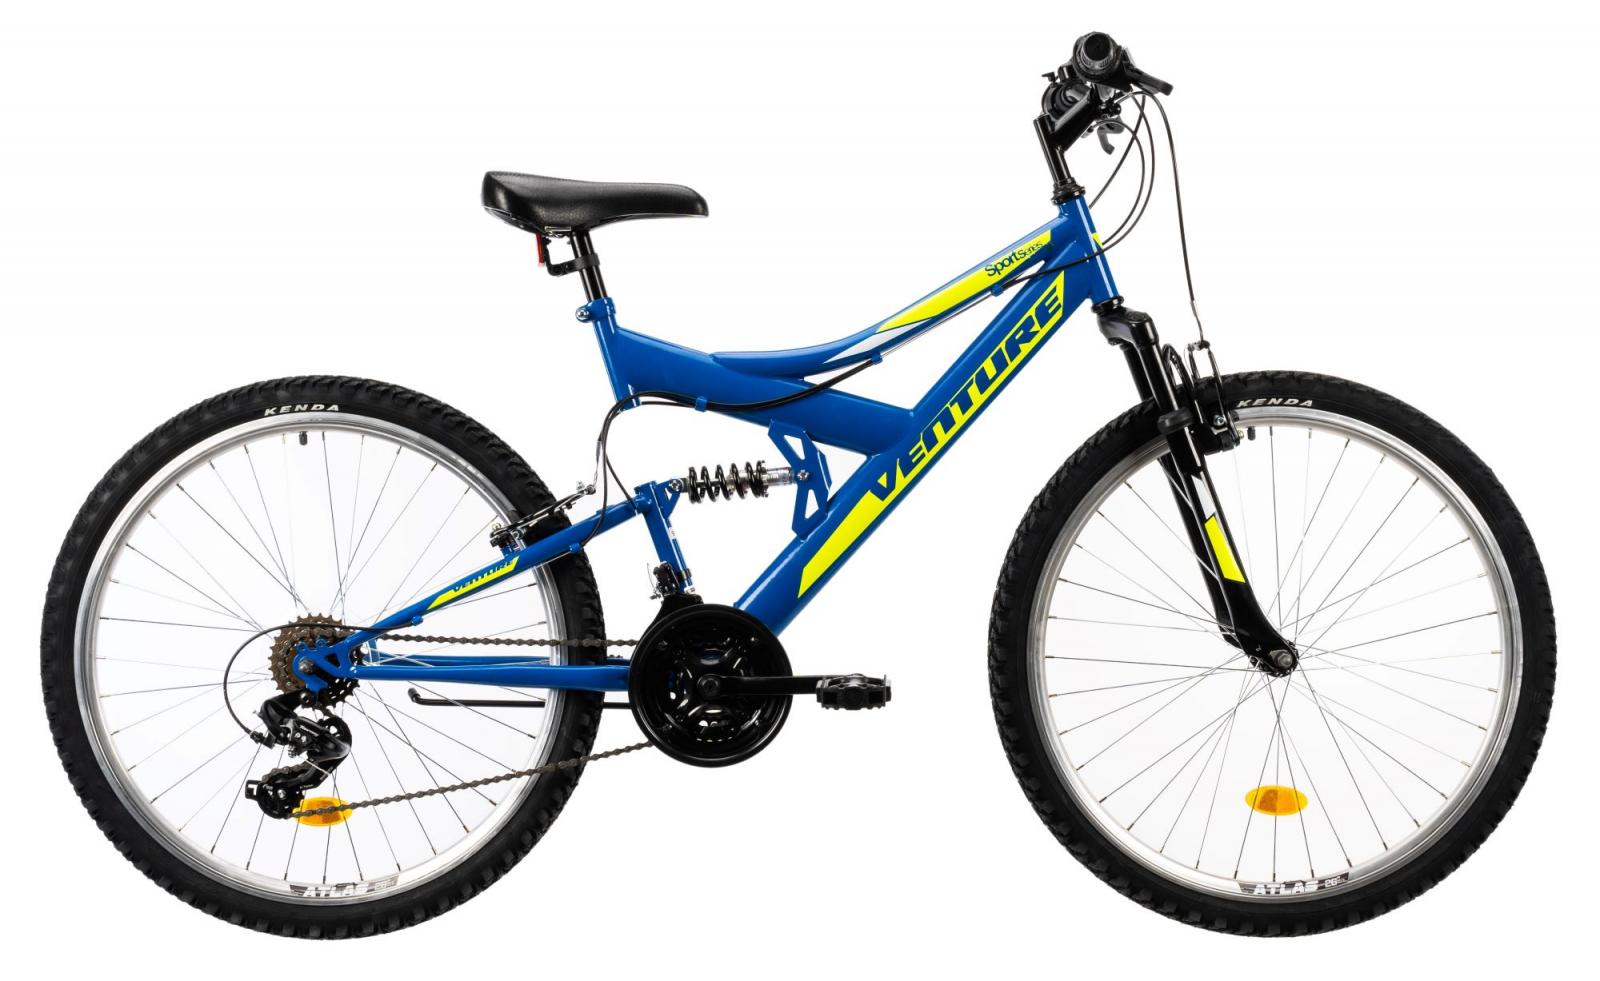 Father fage Affirm To give permission Bicicleta Mtb Venture 2640 - 26 inch, Albastru